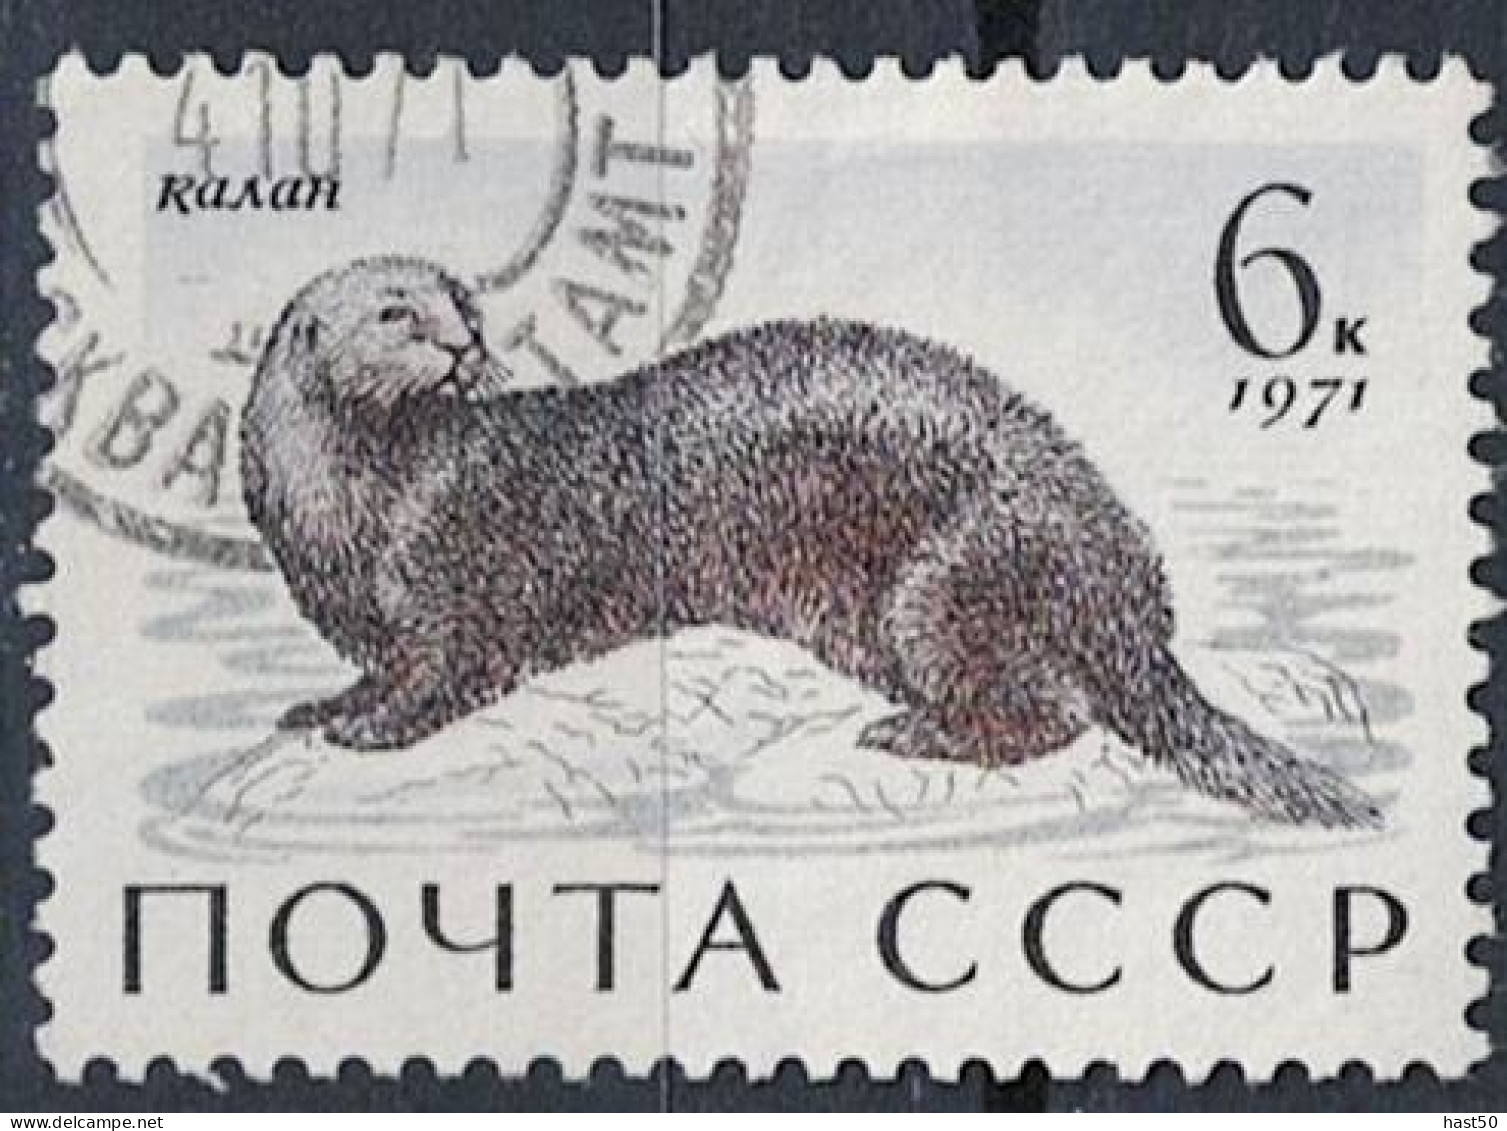 Sowjetunion UdSSR - Seeotter (Enhydra Lutris) (MiNr. 3914) 1971 - Gest Used Obl - Gebruikt